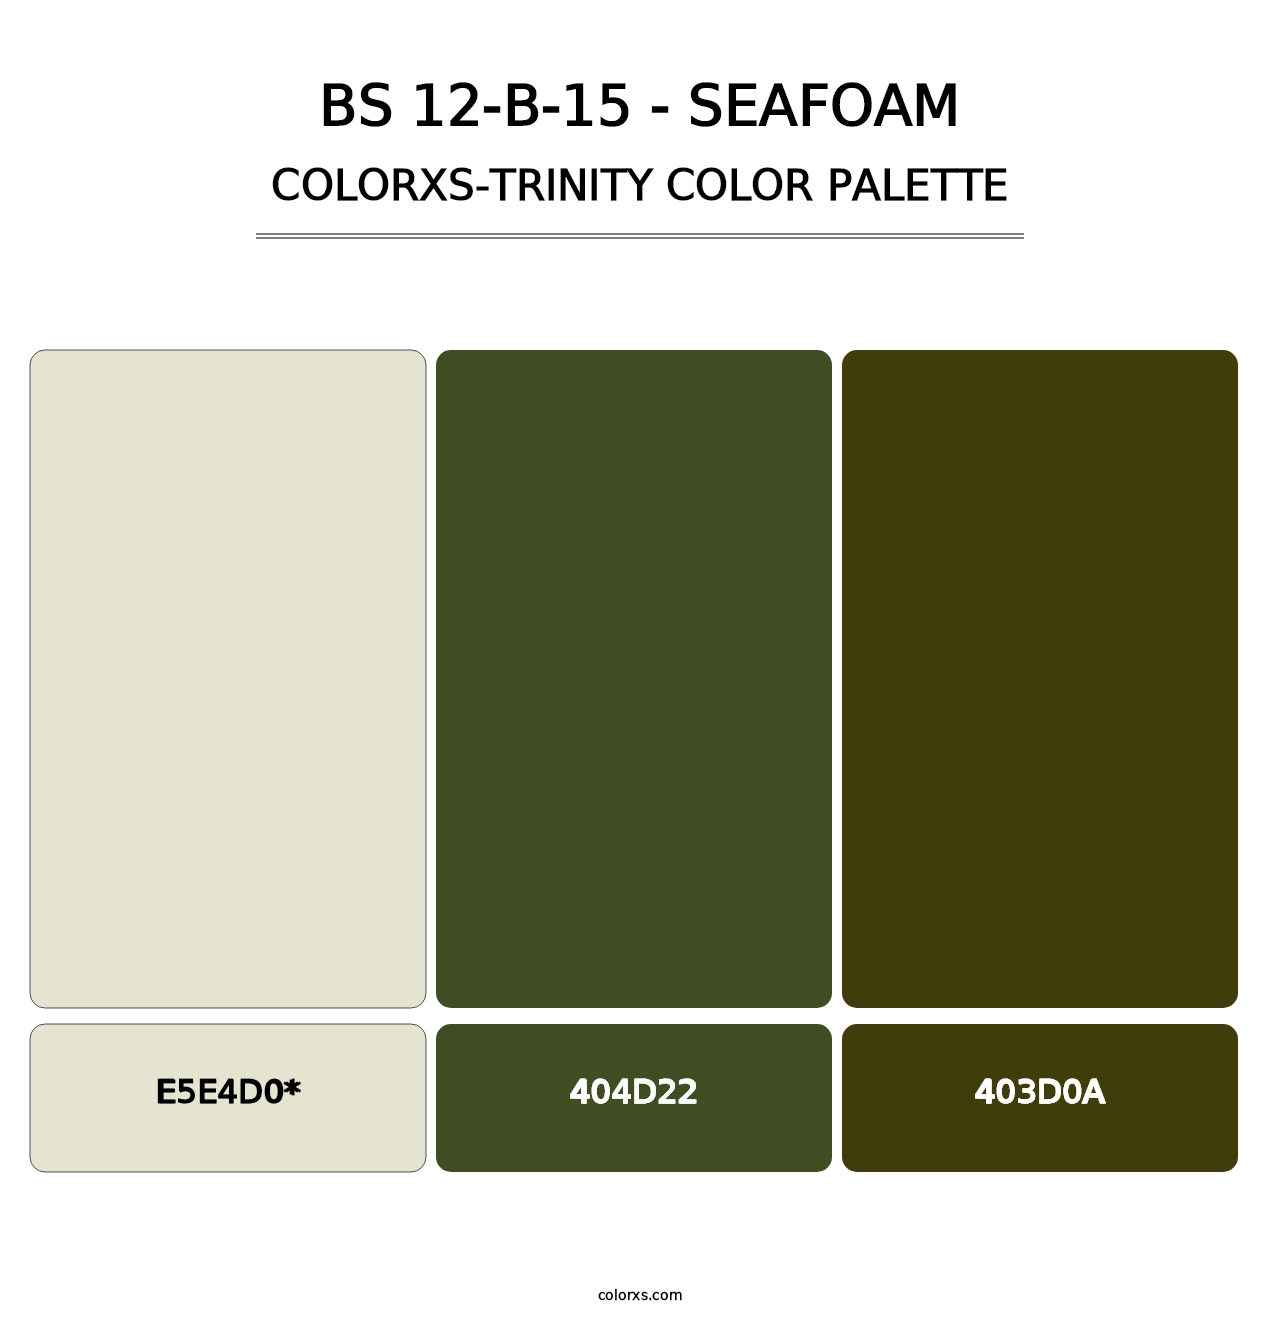 BS 12-B-15 - Seafoam - Colorxs Trinity Palette